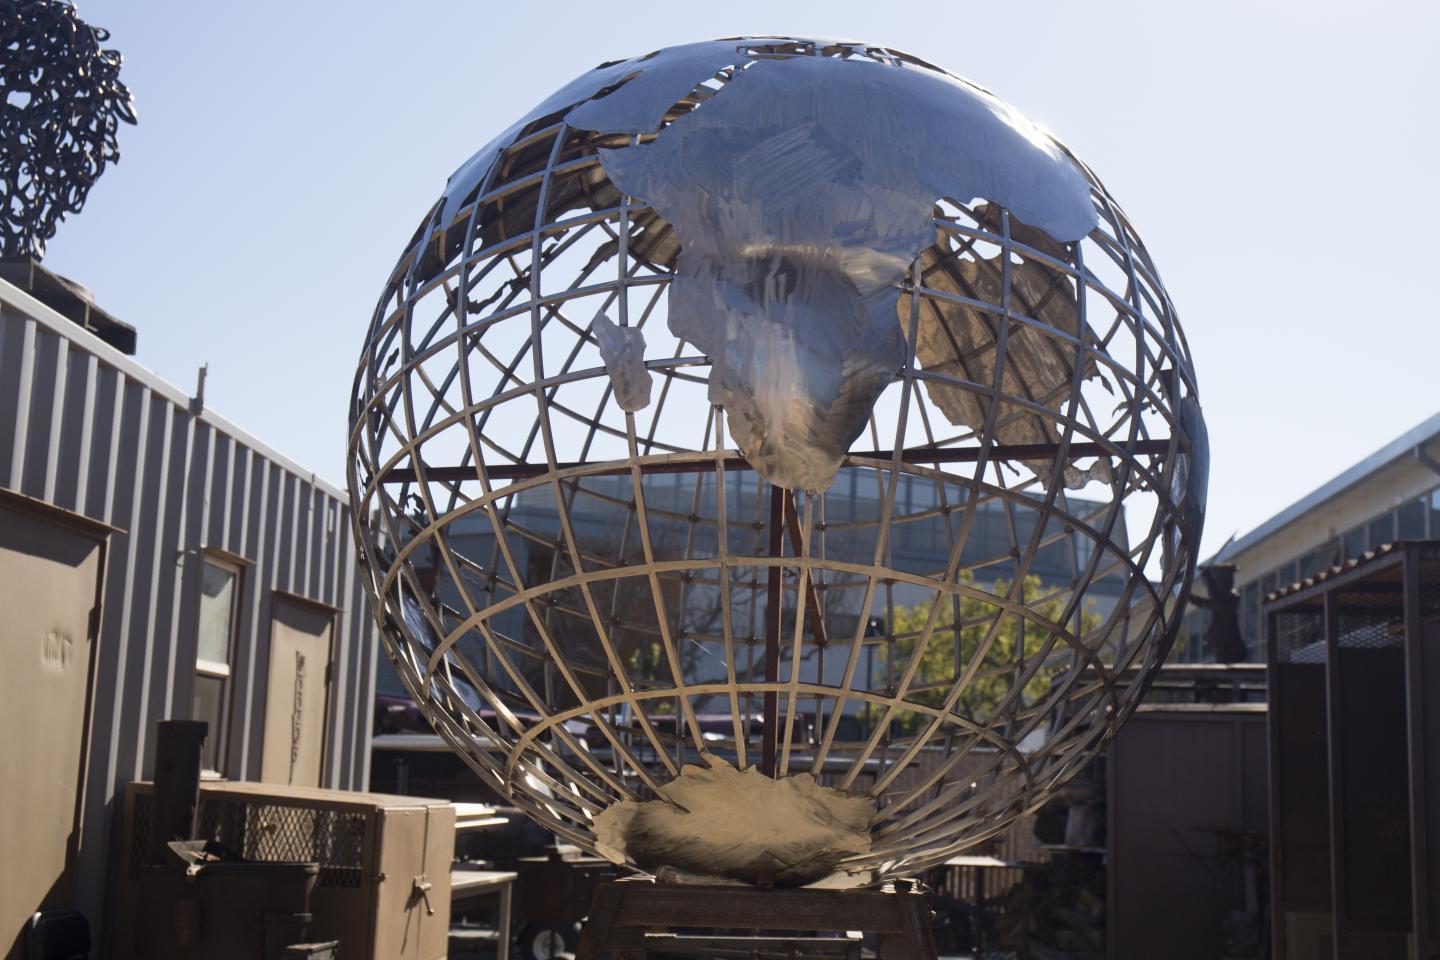 Welded globe created by Ventura College Welding Program